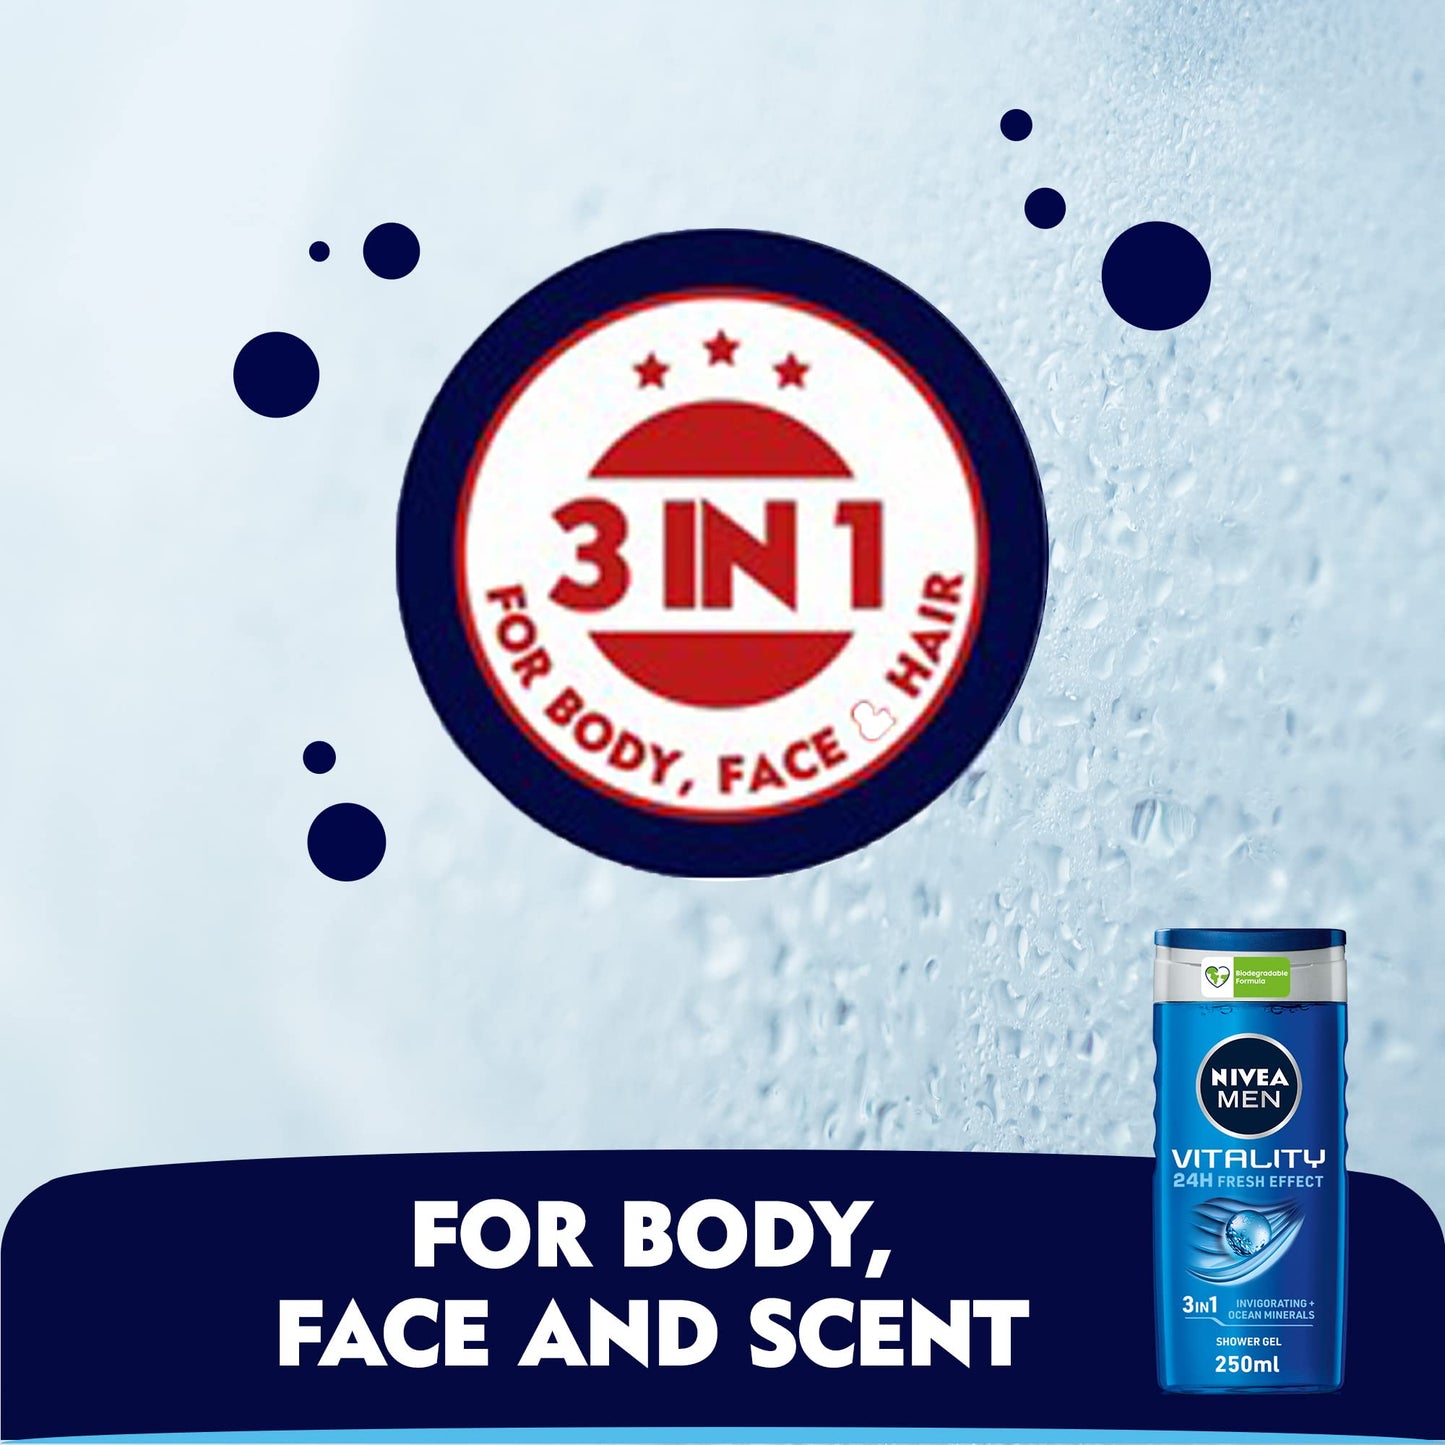 NIVEA MEN 3in1 Shower Gel Body Wash, Vitality Fresh Masculine Scent, 250ml